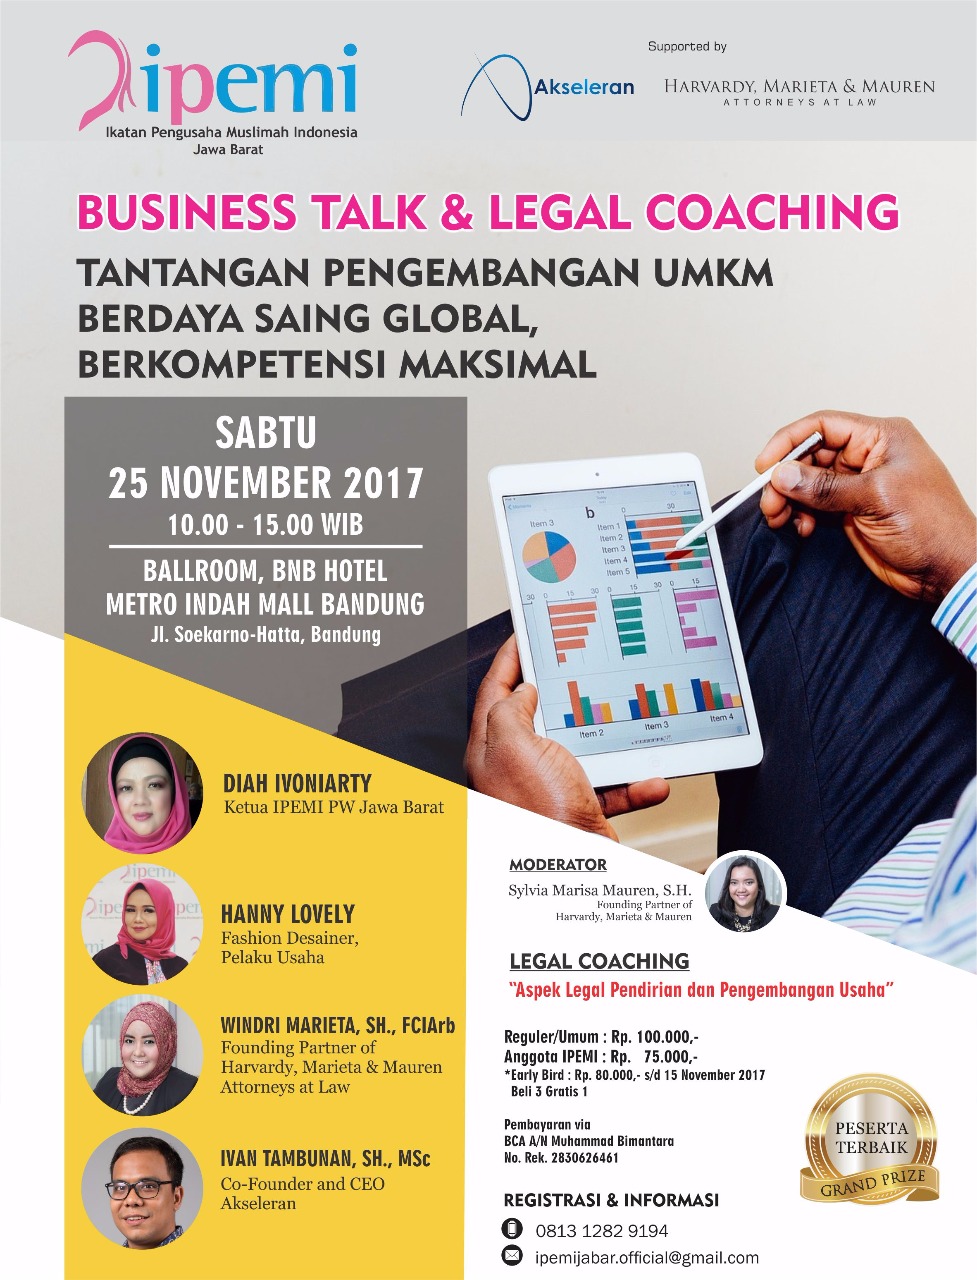 BUSINESS TALK & LEGAL COACHING